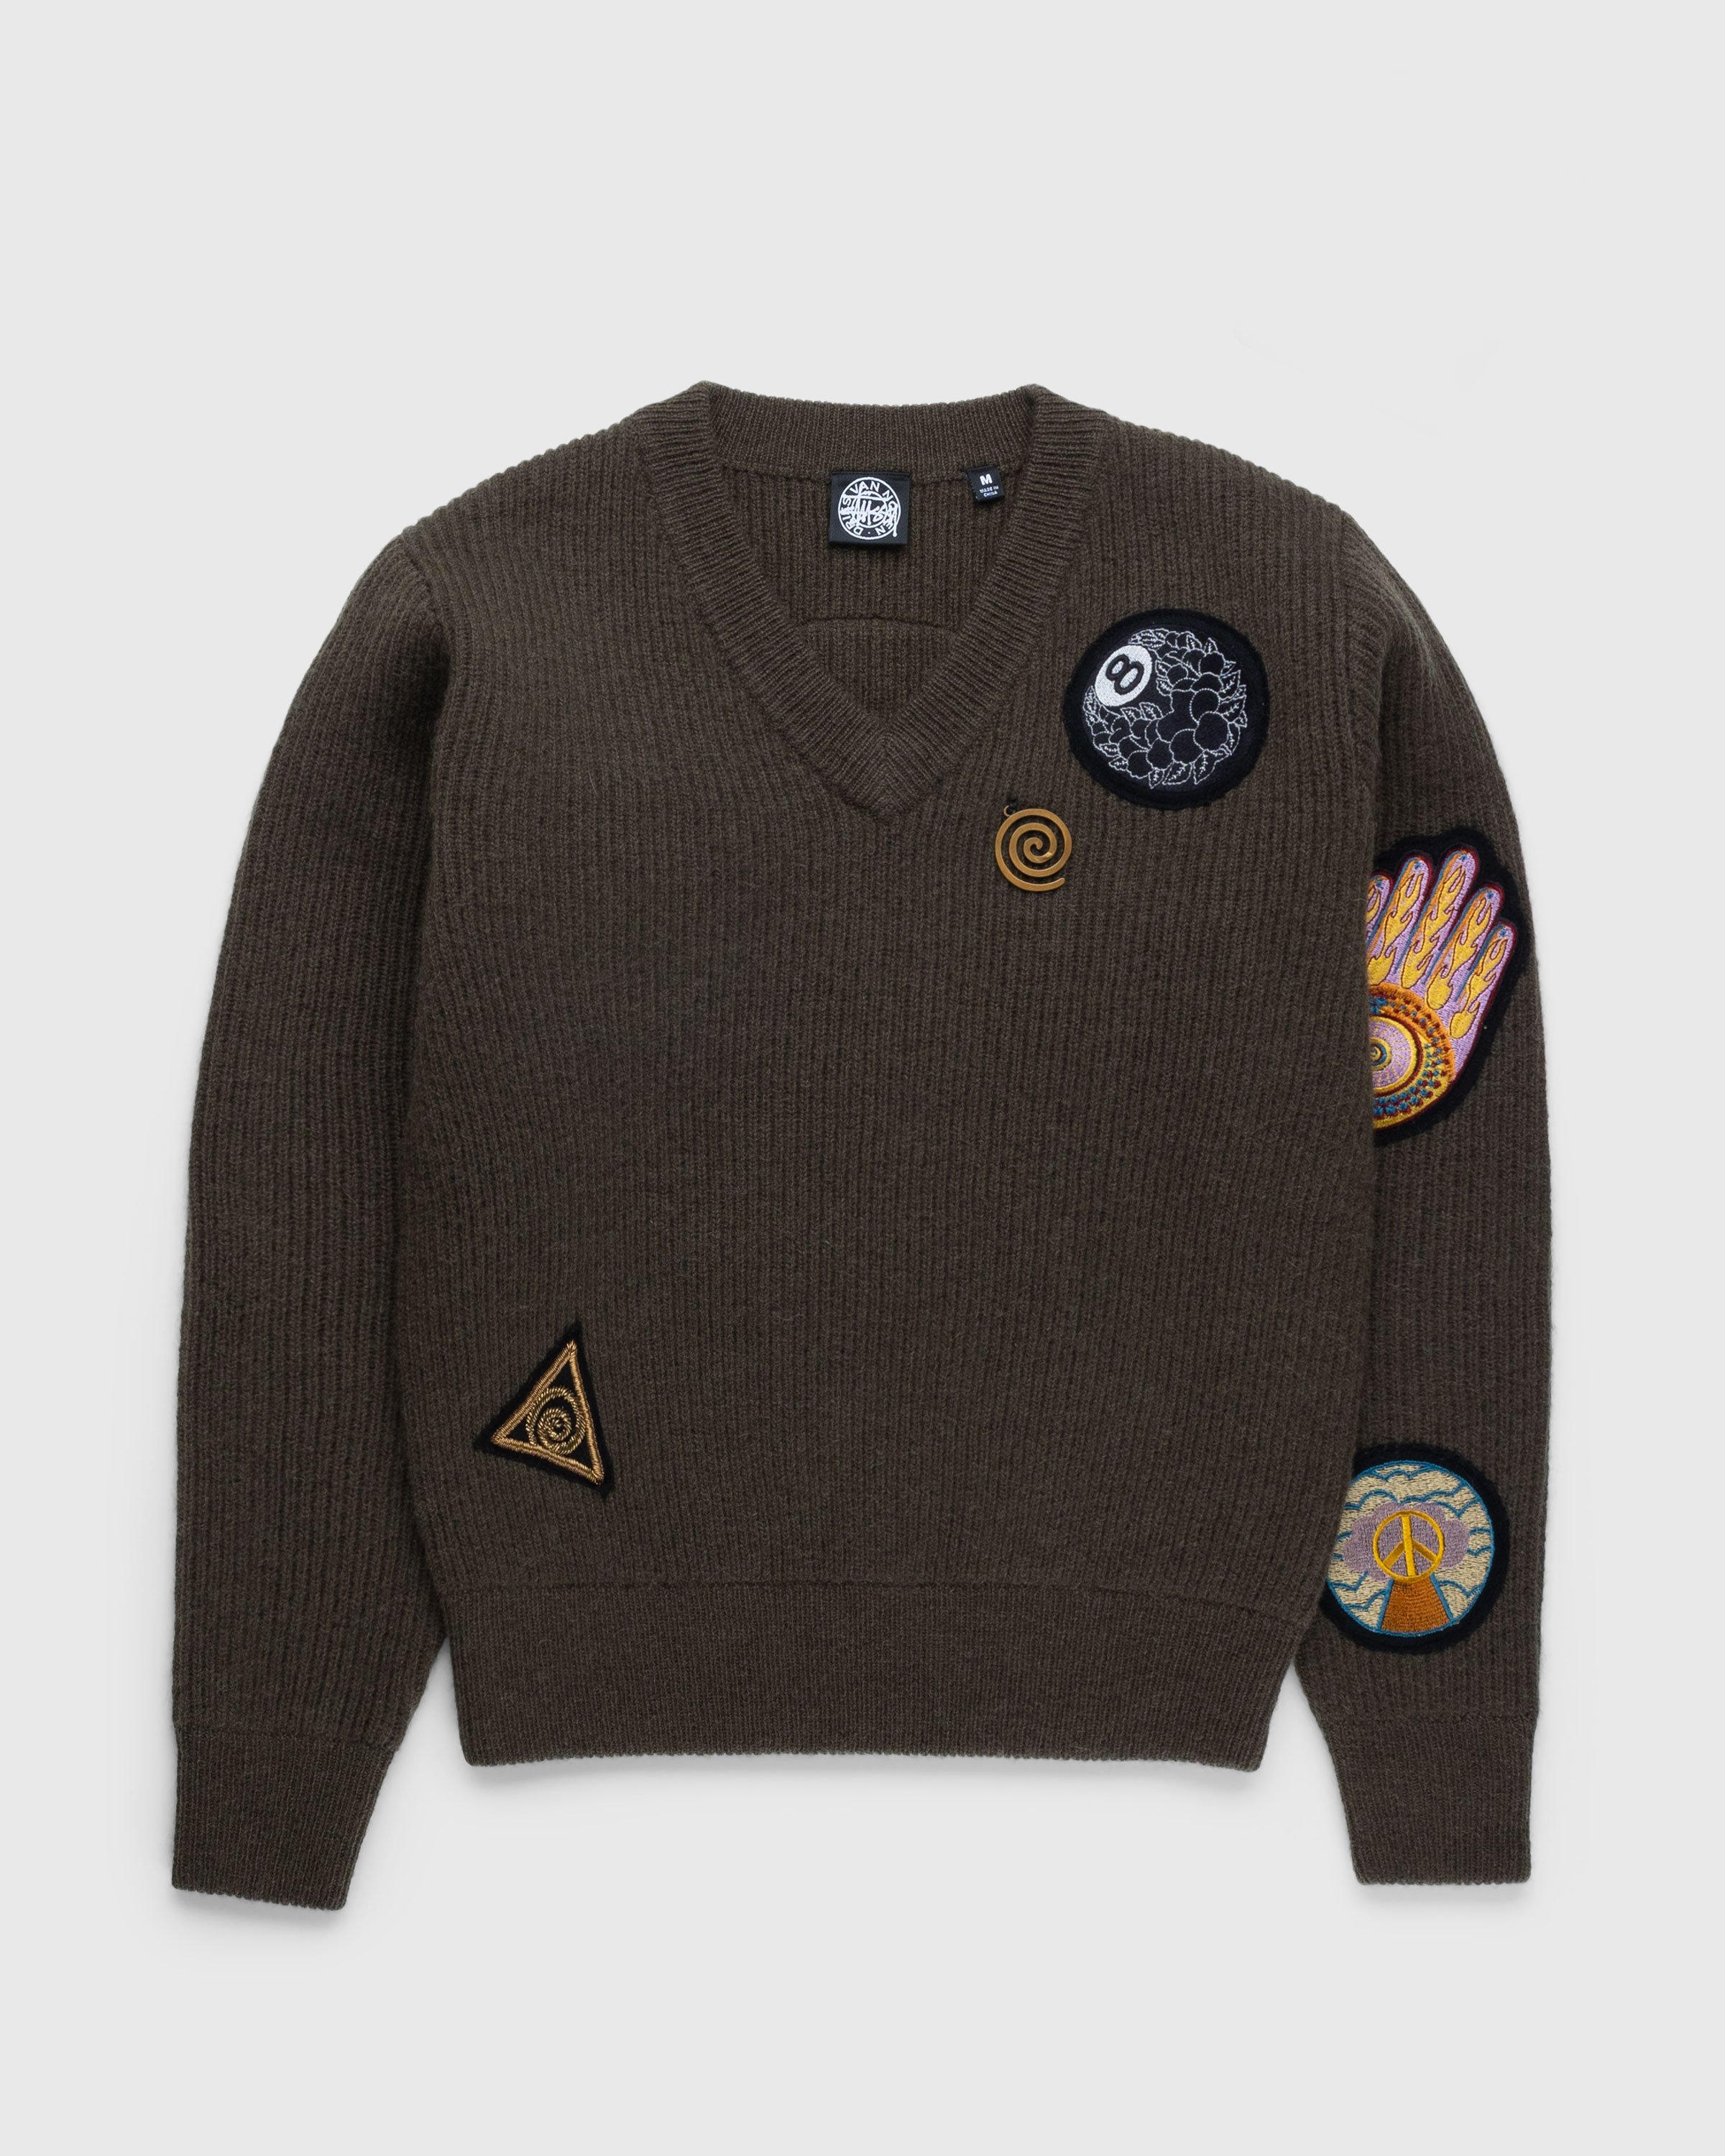 Stüssy x Dries van Noten - Badge Sweater - Clothing - Brown - Image 1